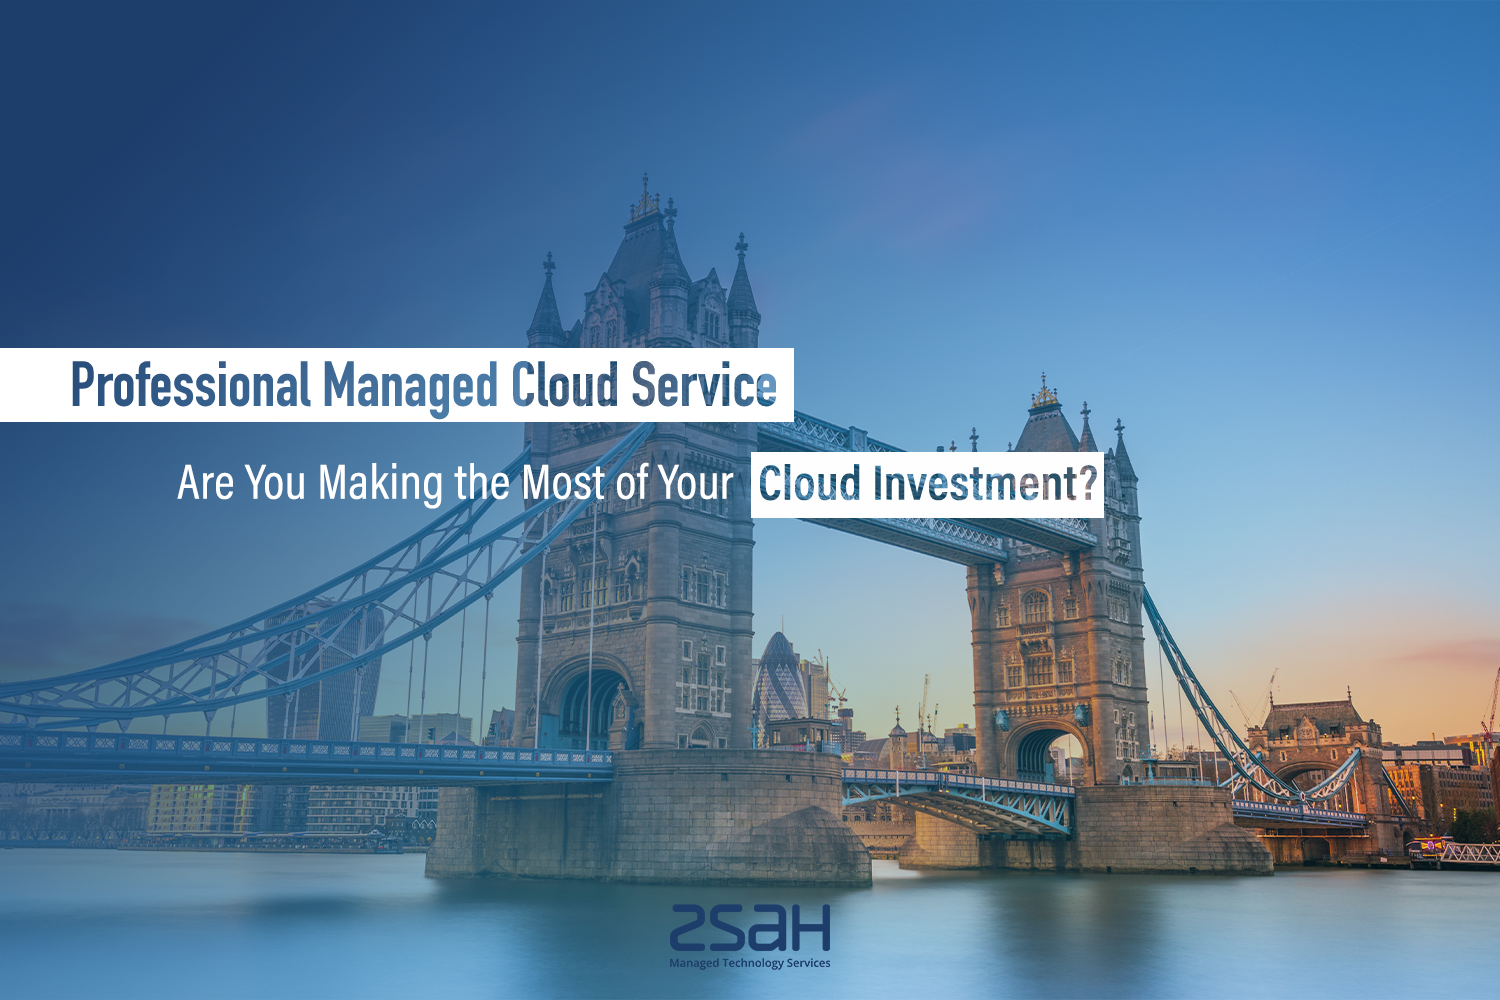 Professional managed cloud service - zsah